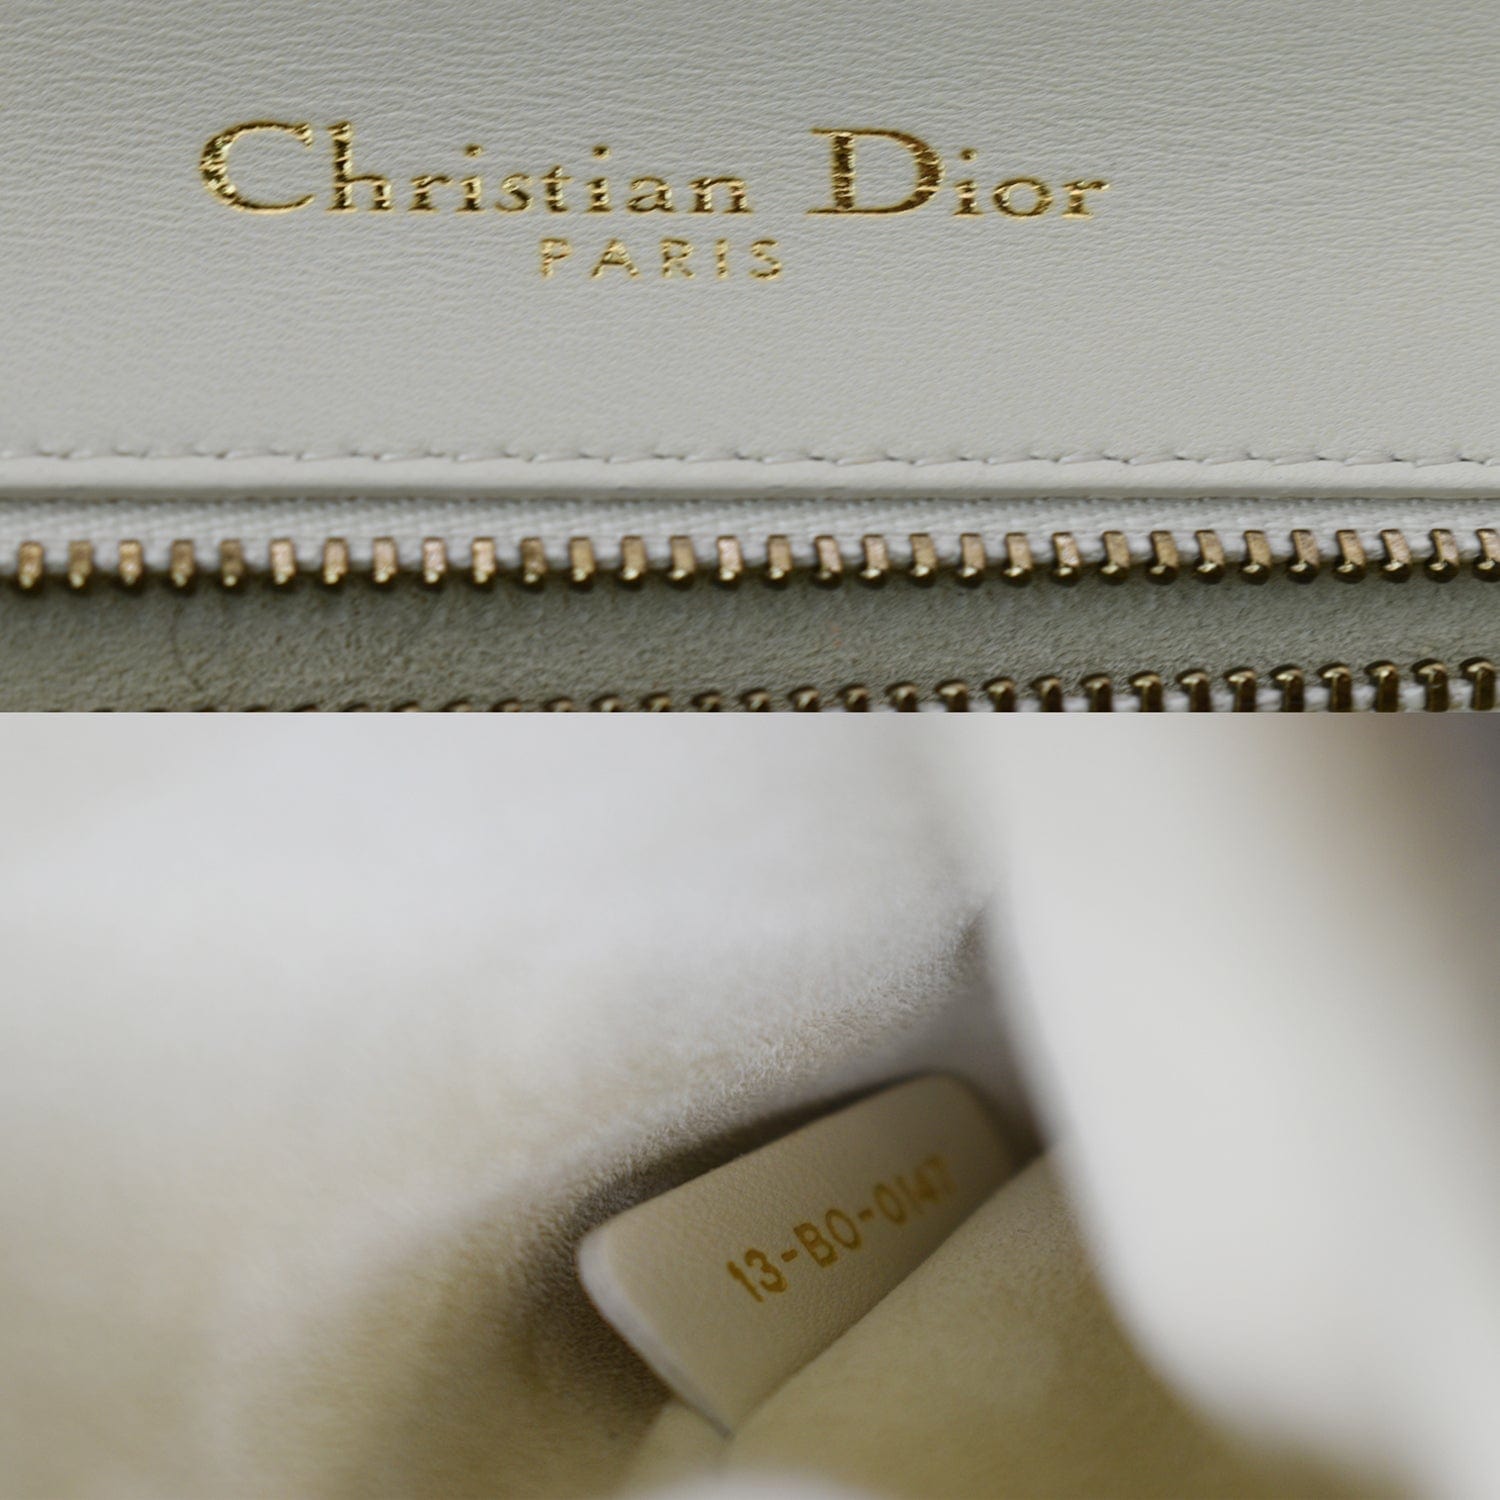 Christian Dior Small Diorama Flap Bag